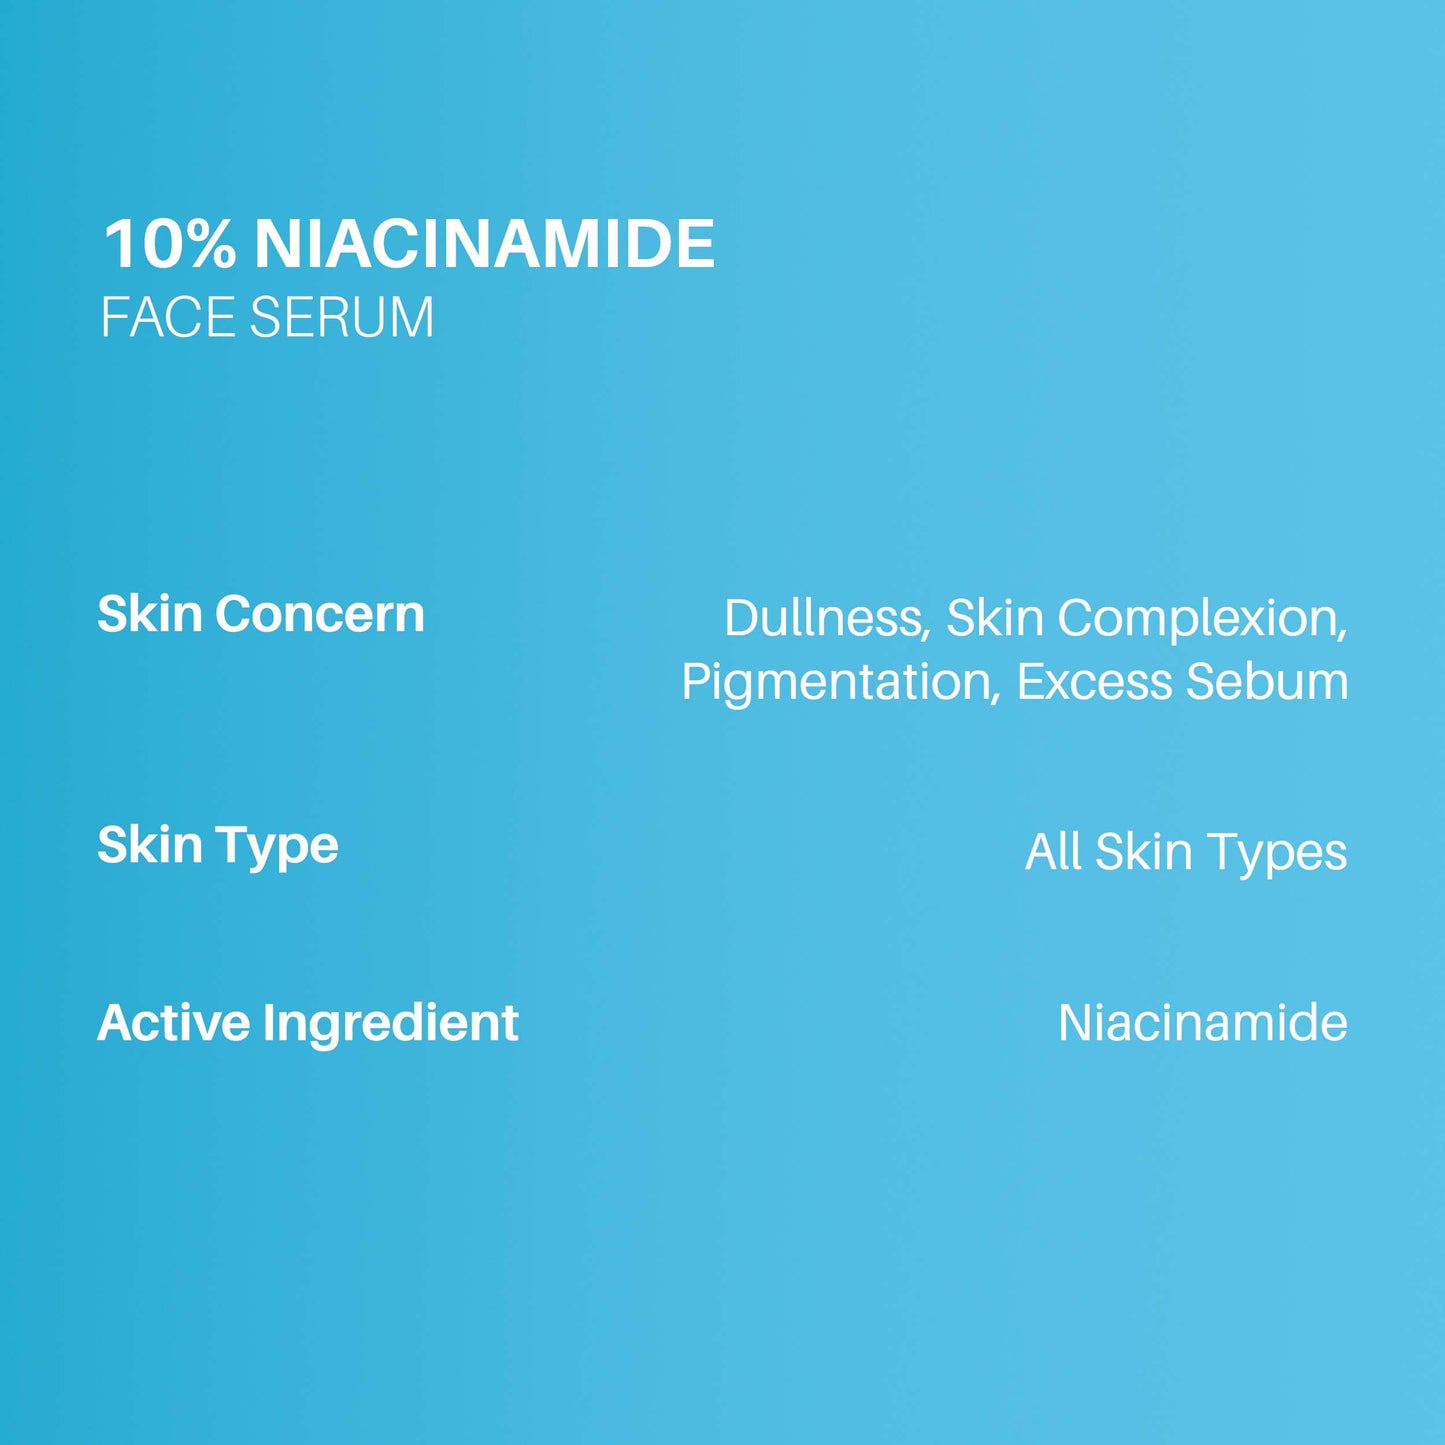 DermDoc 10% Niacinamide Face Serum For Dark Spots & Oil Control (15ml)